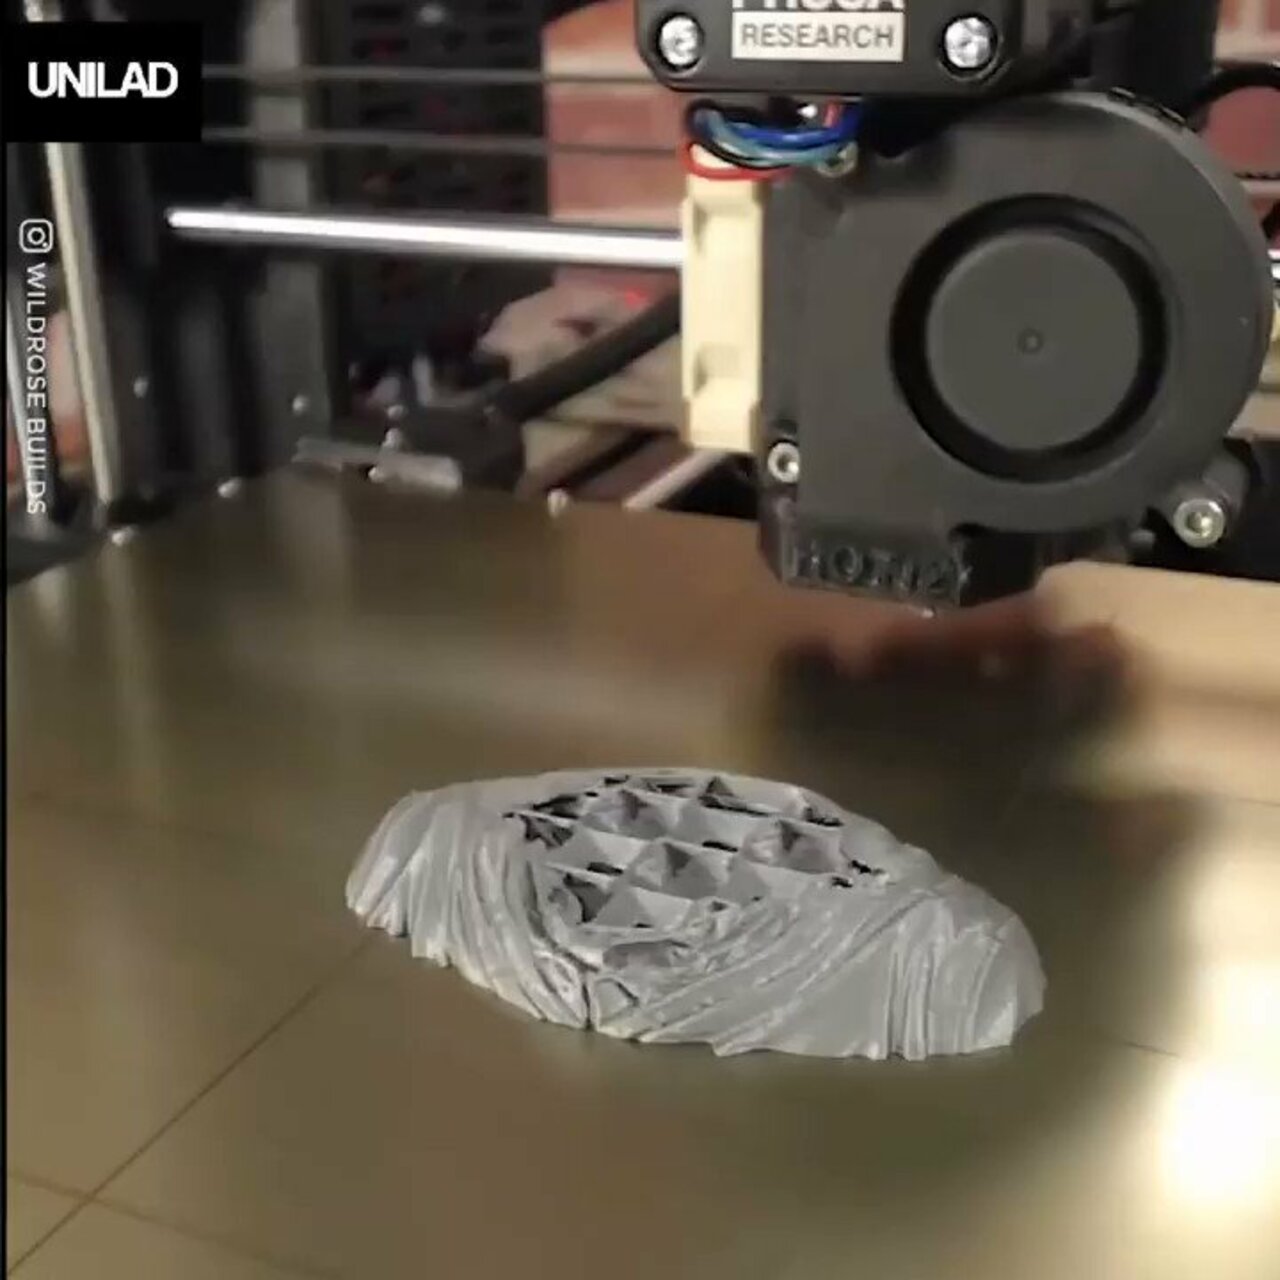 The magics of 3D printing #tech #innovation #Robotics #3Dprinting @alvinfoo @kashthefuturist @FrRonconi @MikeQuindazzi @Paula_Piccard @Ronald_vanLoon @jblefevre60 @evankirstel @PerdomoJavier @diioannid @kuriharan @psb_dc @JolaBurnett https://t.co/t9dh2N7iiF